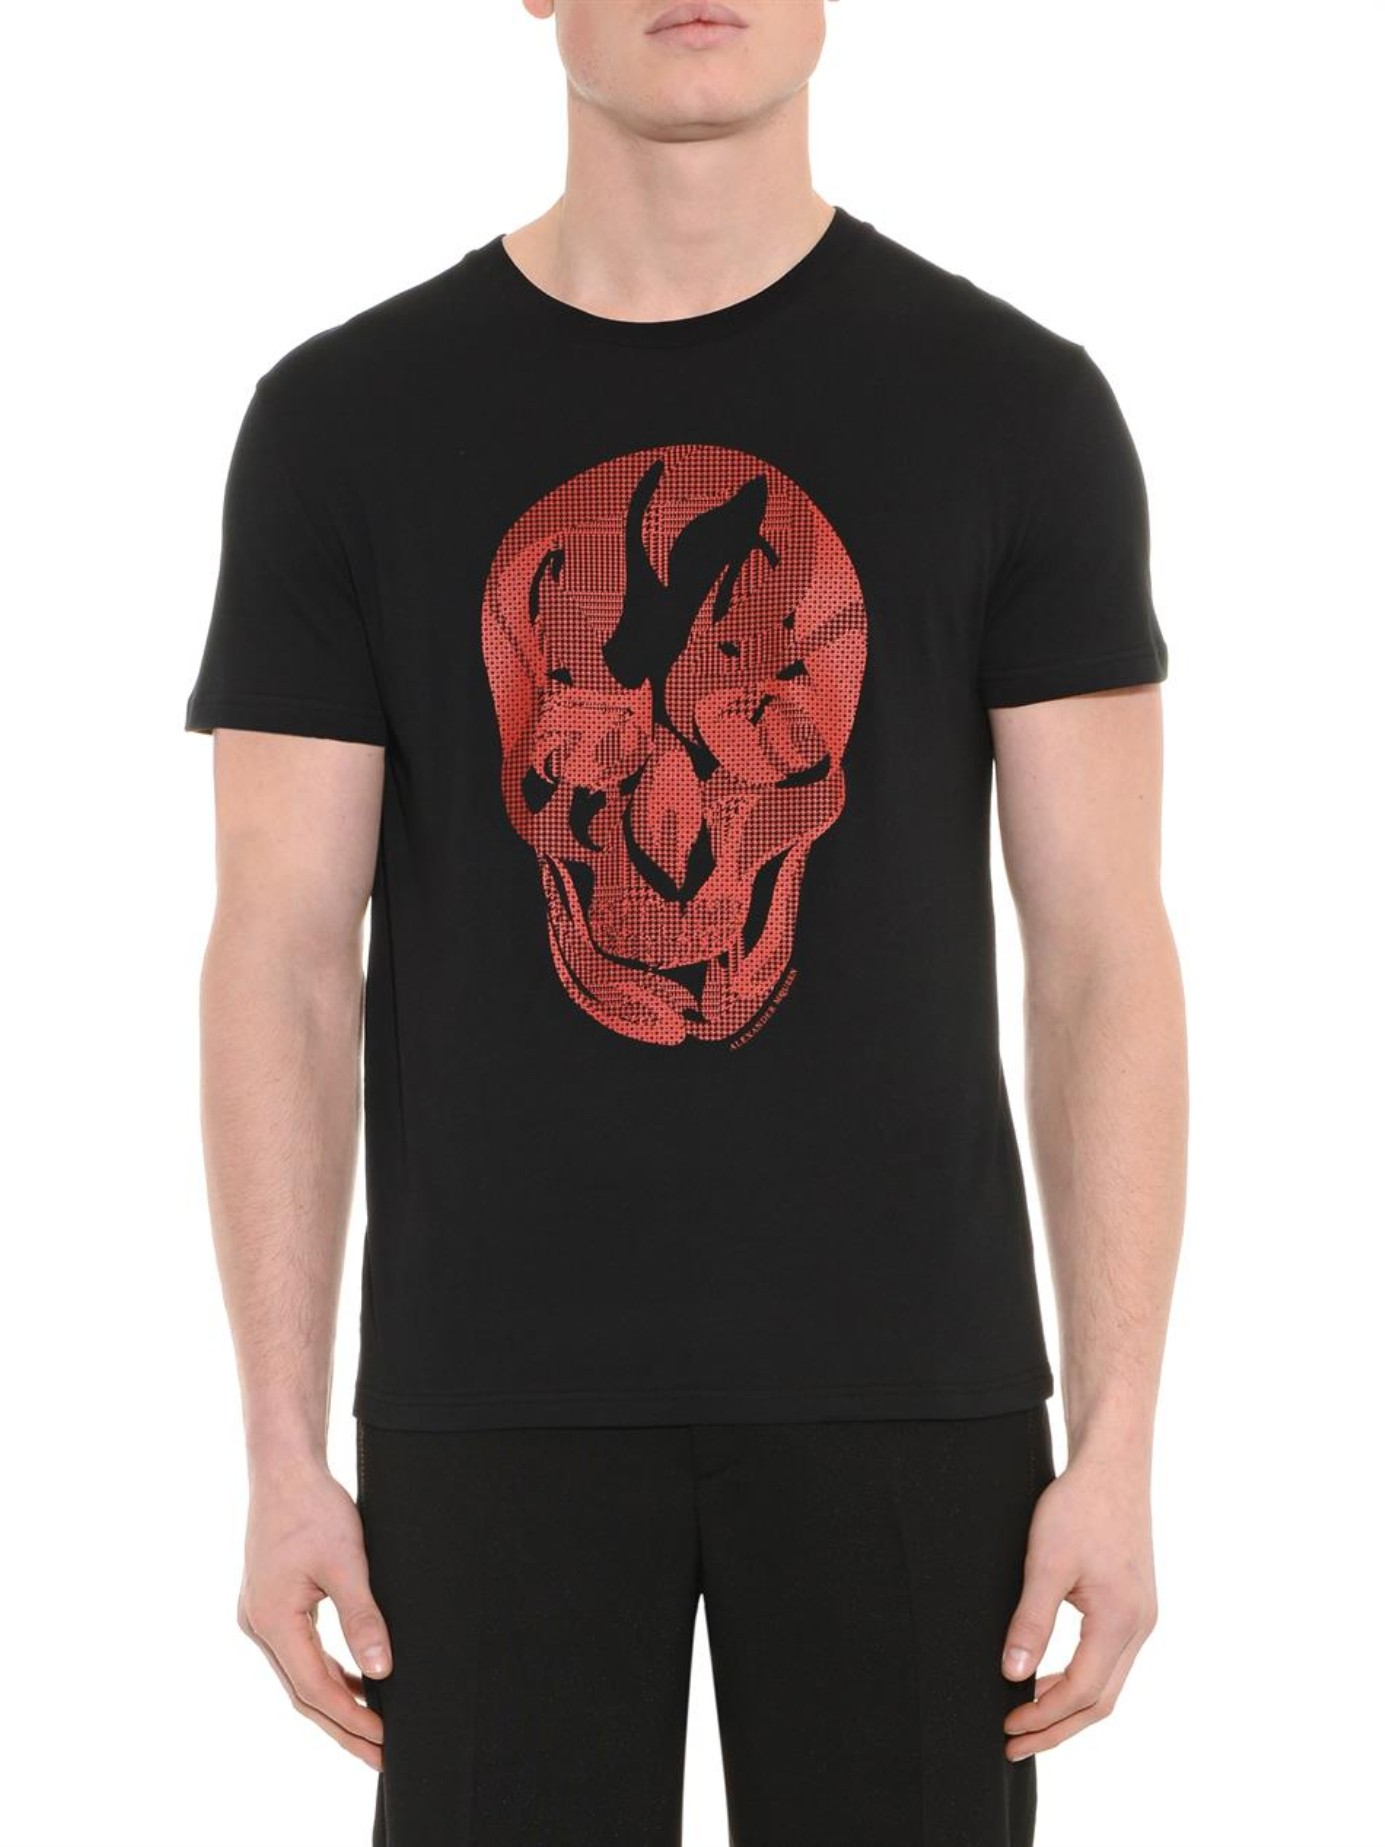 Lyst - Alexander Mcqueen Skull-Print Cotton T-Shirt in Black for Men